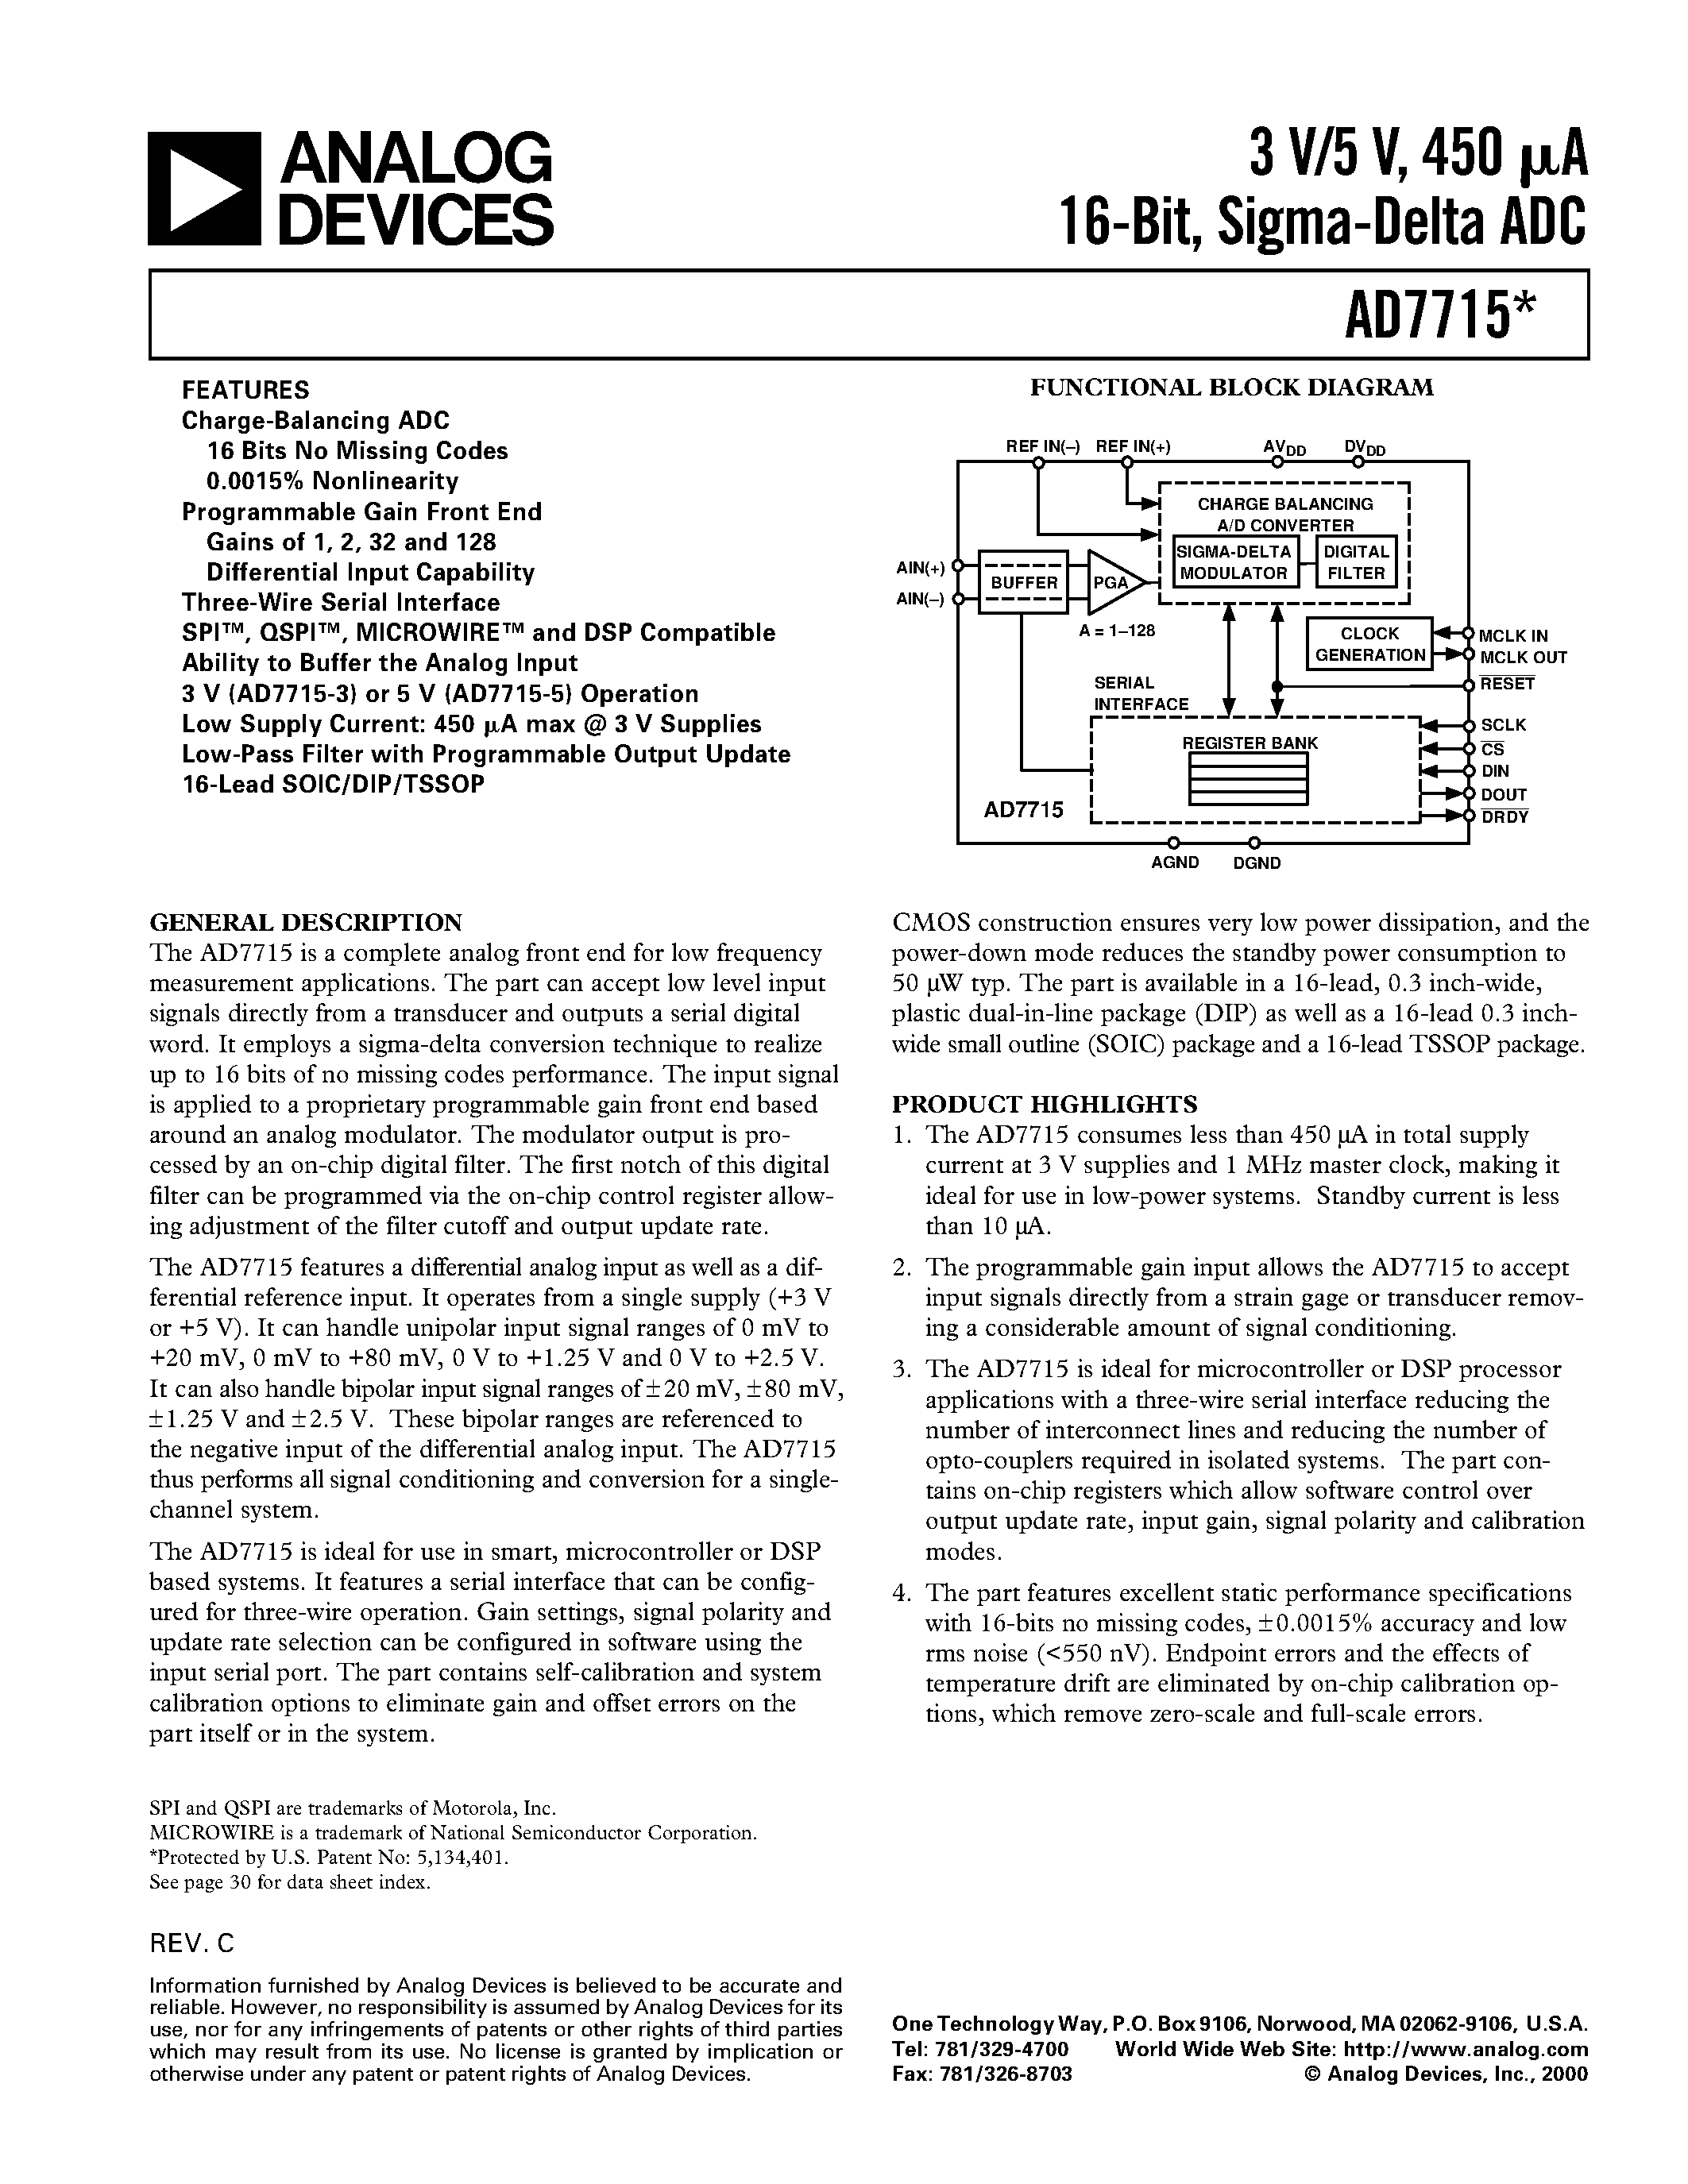 Datasheet AD7715AR-5 - 3 V/5 V/ 450 uA 16-Bit/ Sigma-Delta ADC page 1